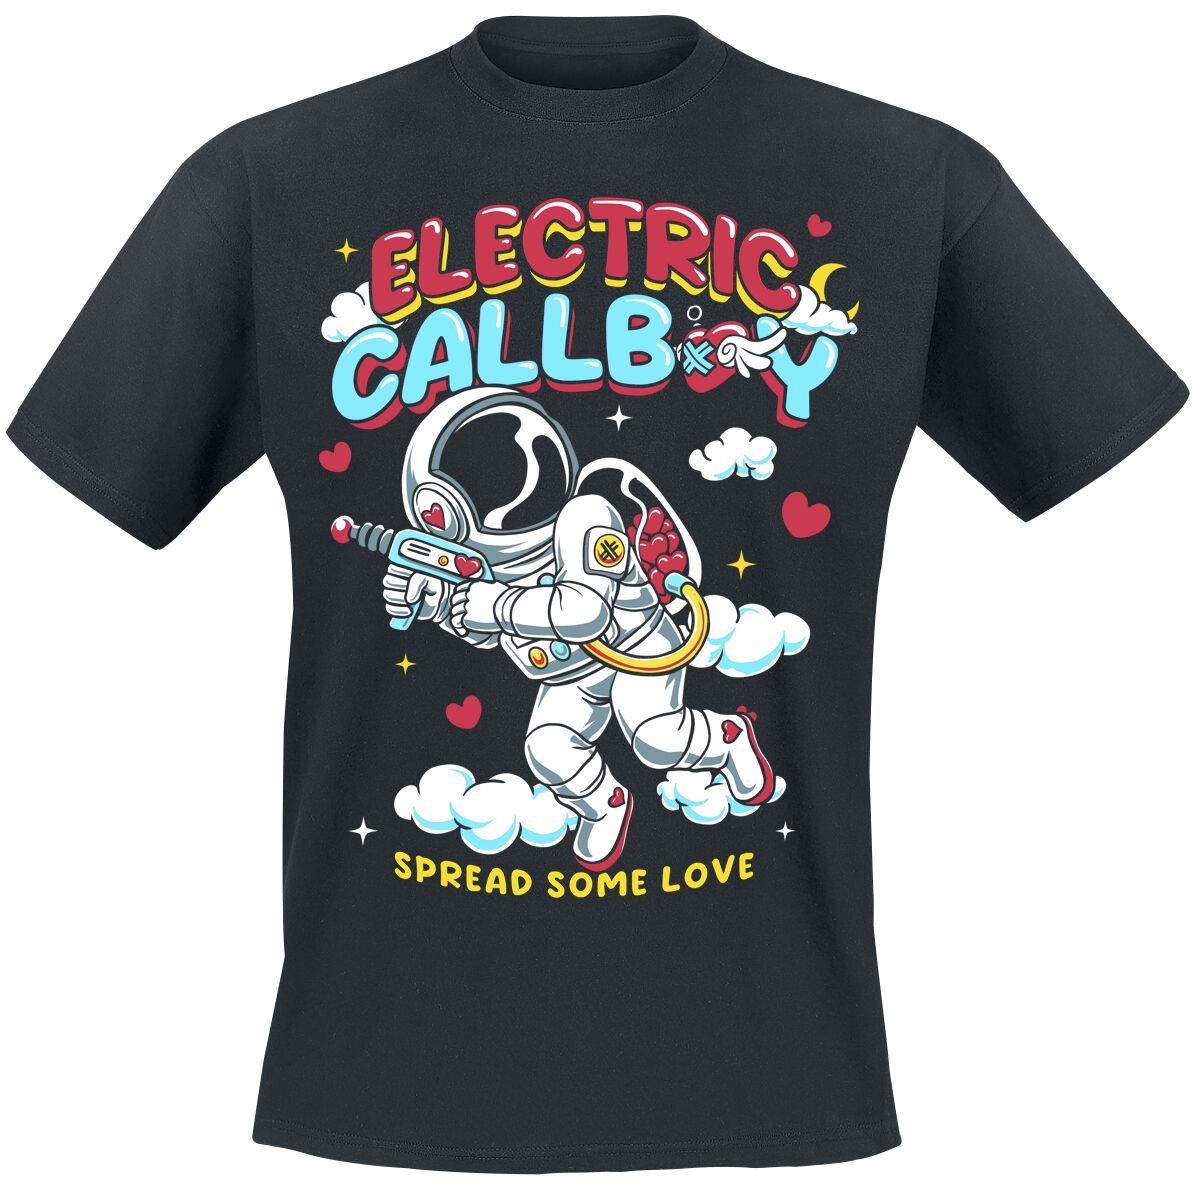 Electric Callboy Spread Some Love T-Shirt schwarz in L